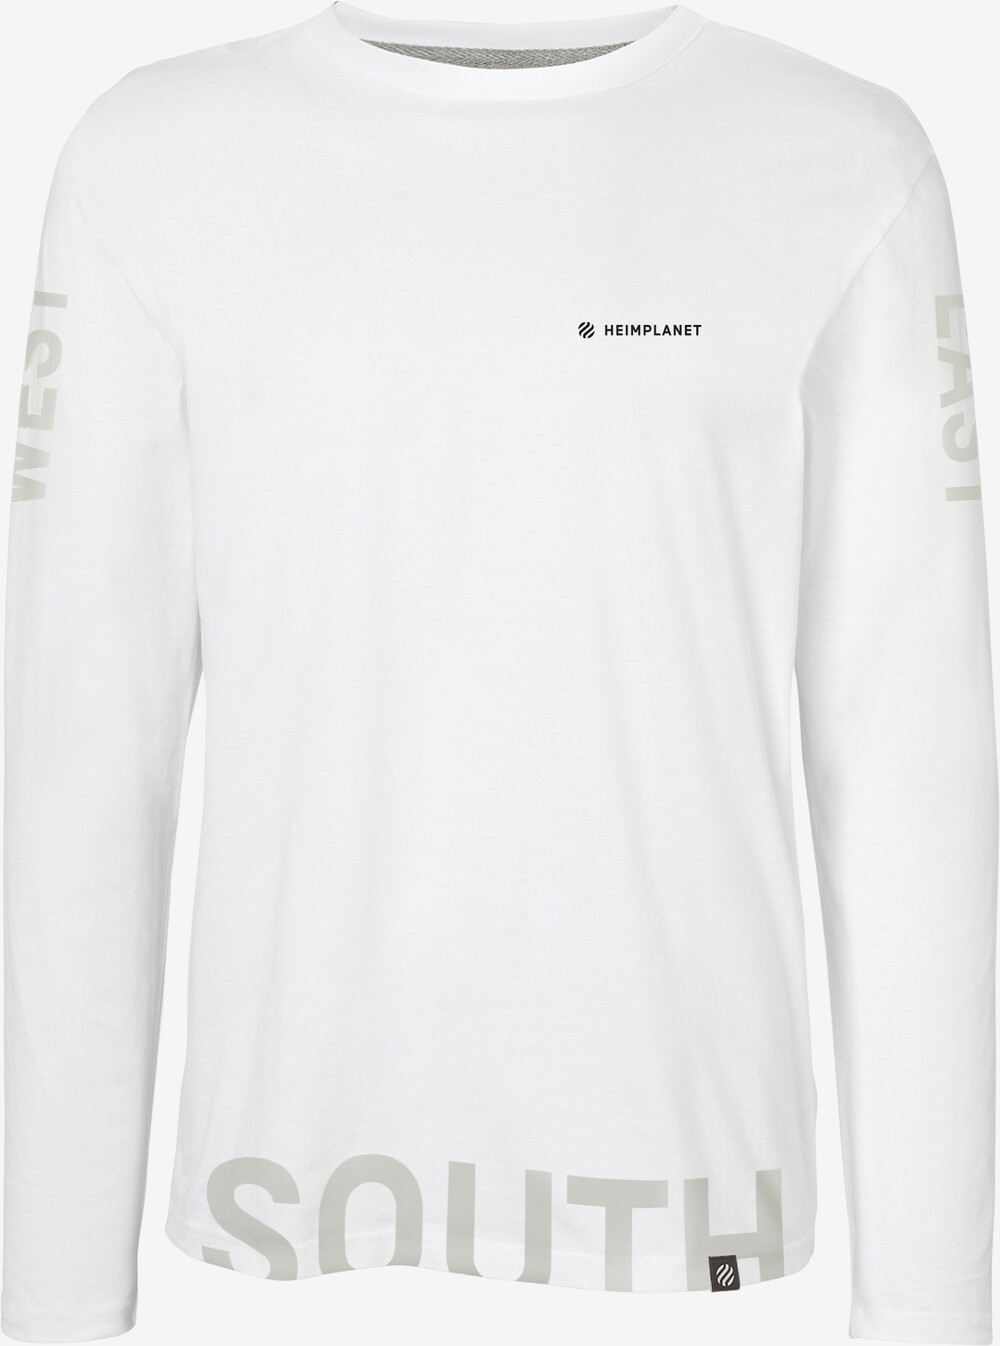 Heimplanet - Apparel langærmet t-shirt (Hvid) - XL